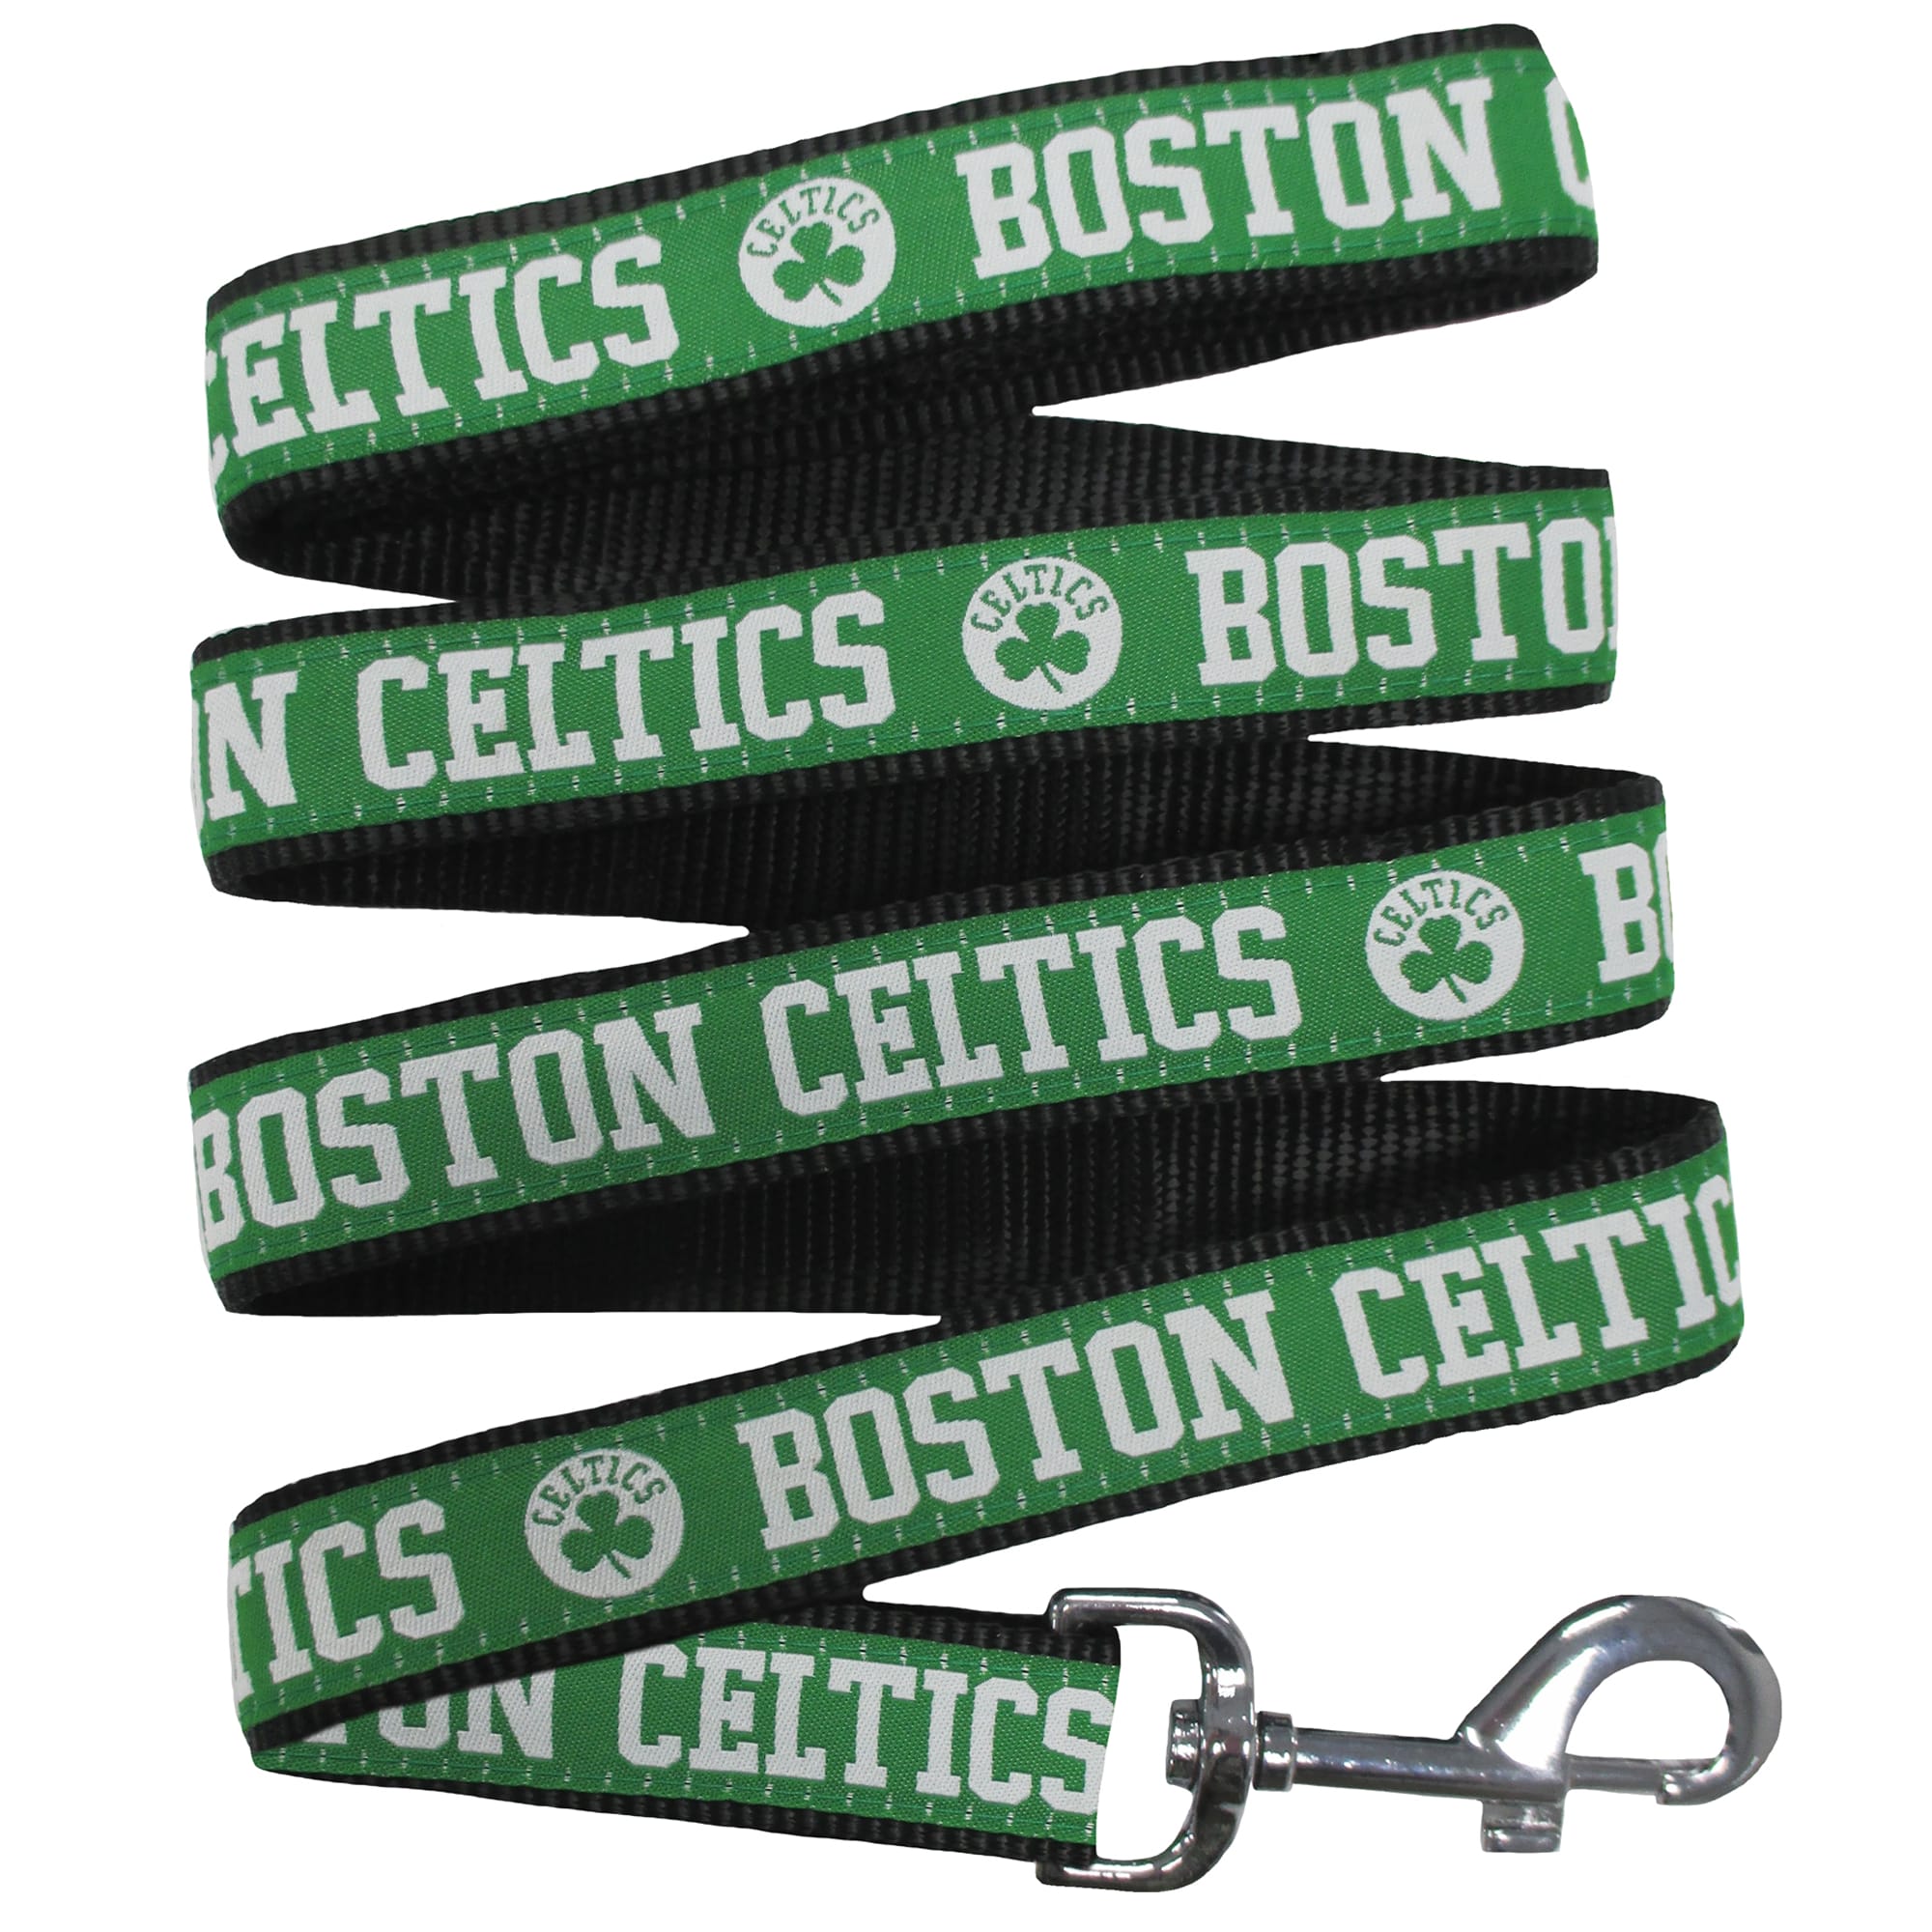 Small Pets First Boston Celtics Leash 